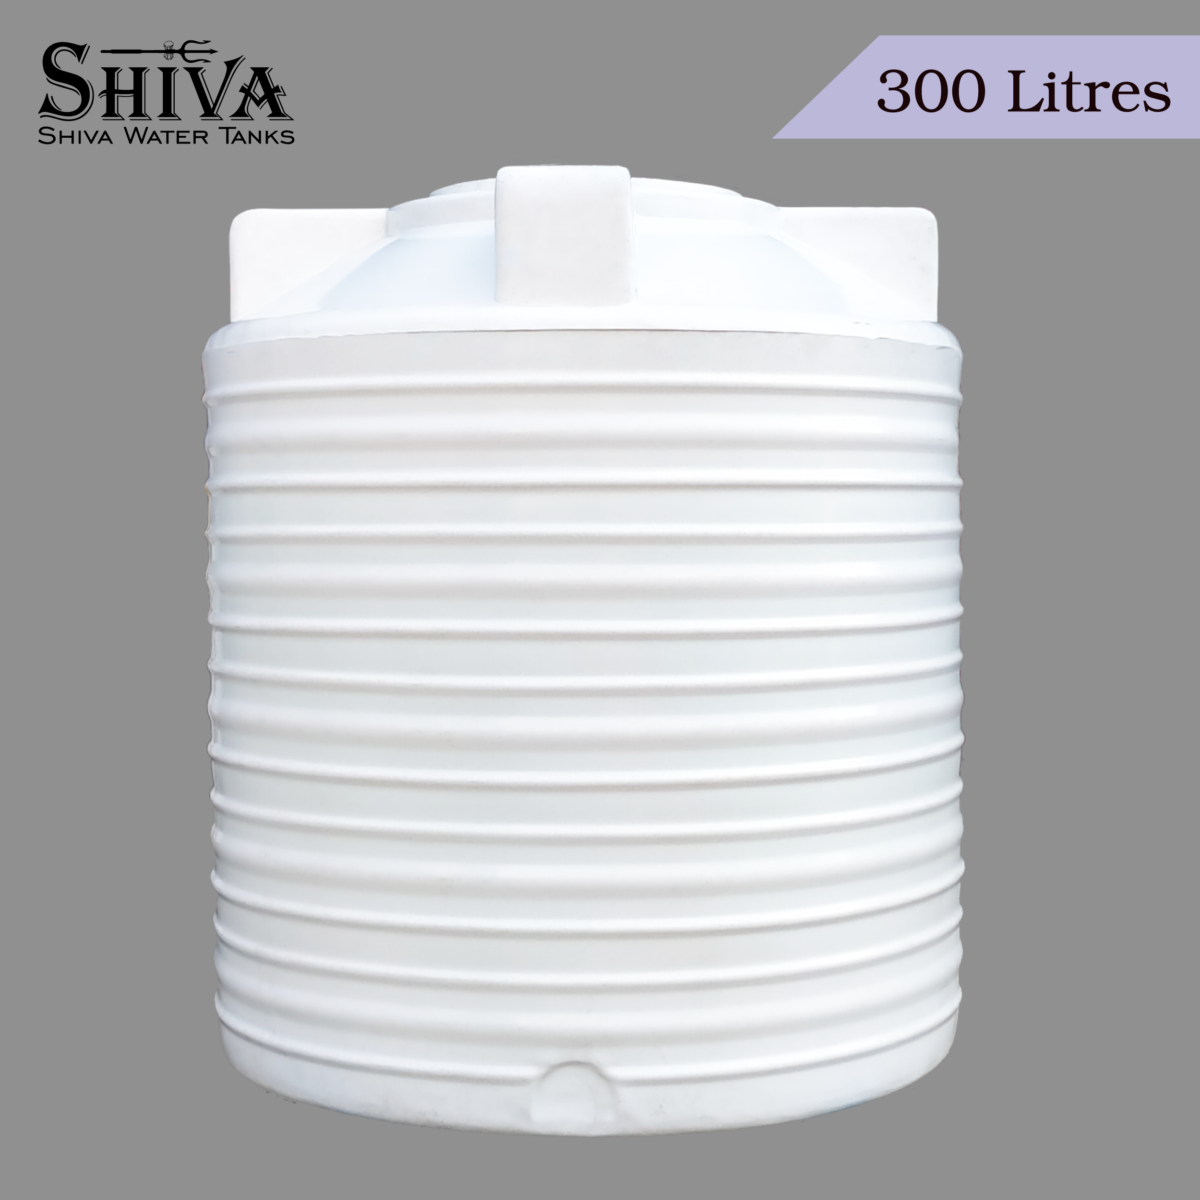 300 Litres - SHIVA Plus - 3 Layers